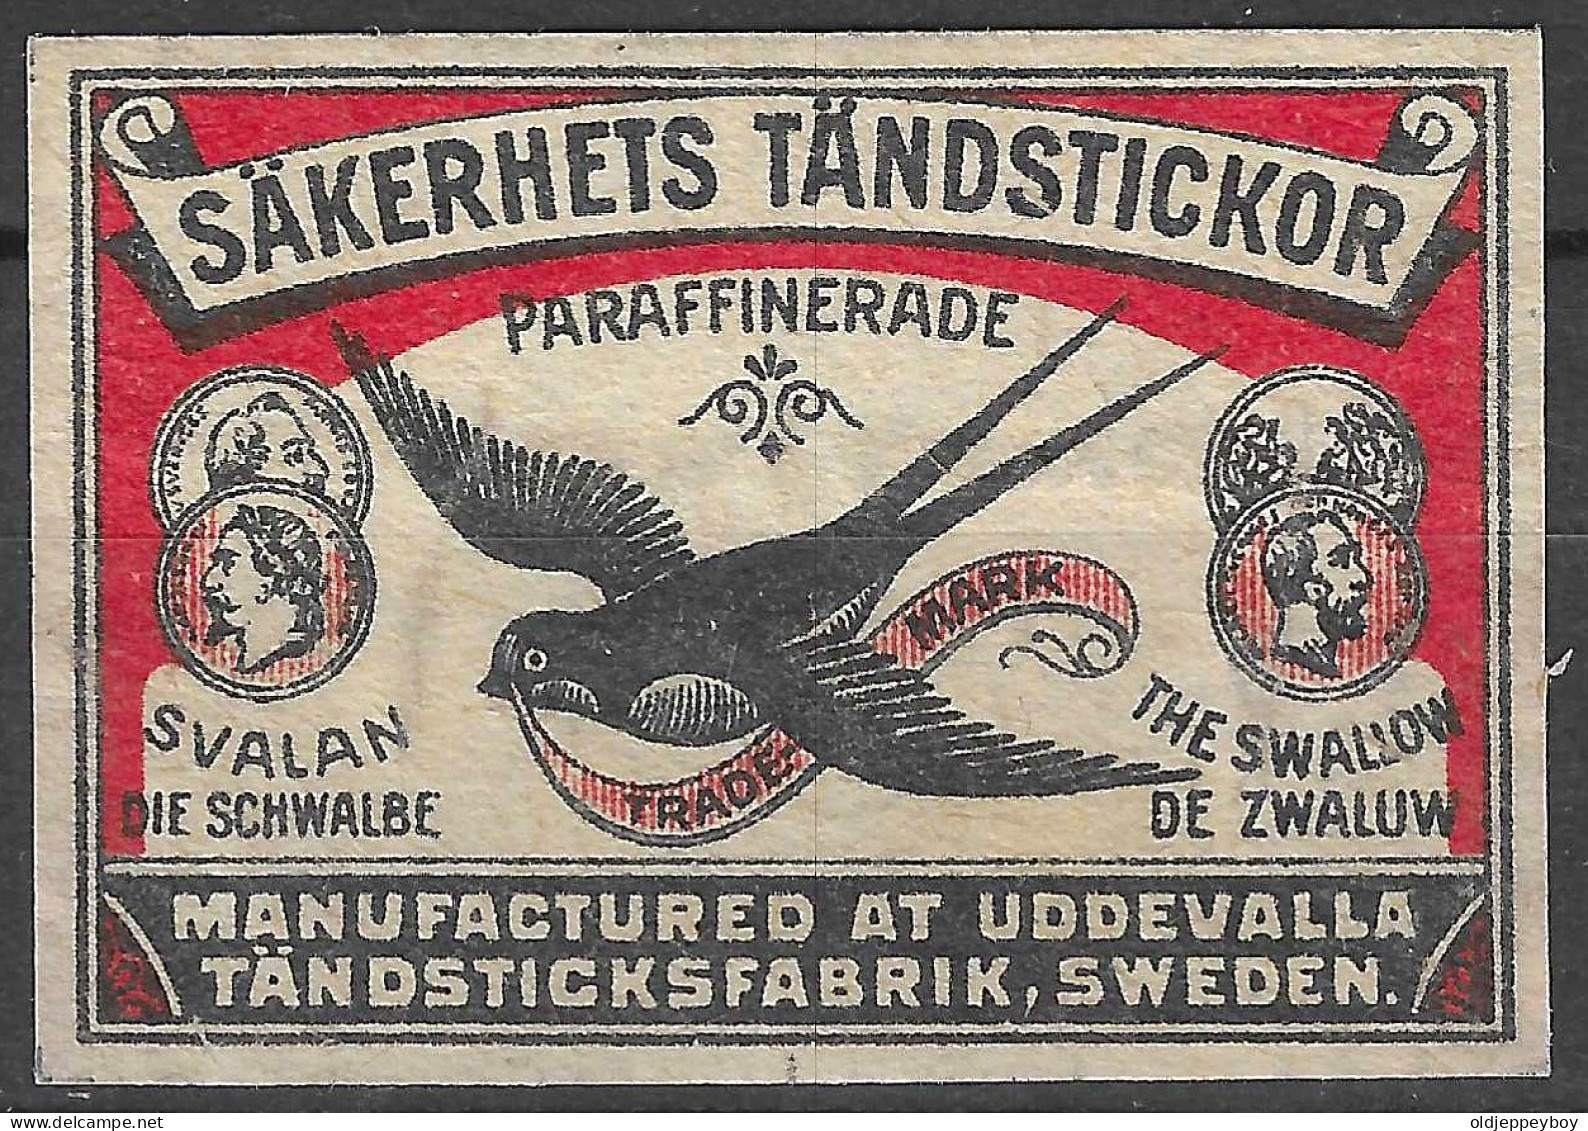 MADE AT UDDEVALLA TANDSTICKSFABRIK SWEDEN VINTAGE Phillumeny MATCHBOX LABELSAKERHETS TANDSTICKOR THE SWALLOW DE ZWALUW - Scatole Di Fiammiferi - Etichette